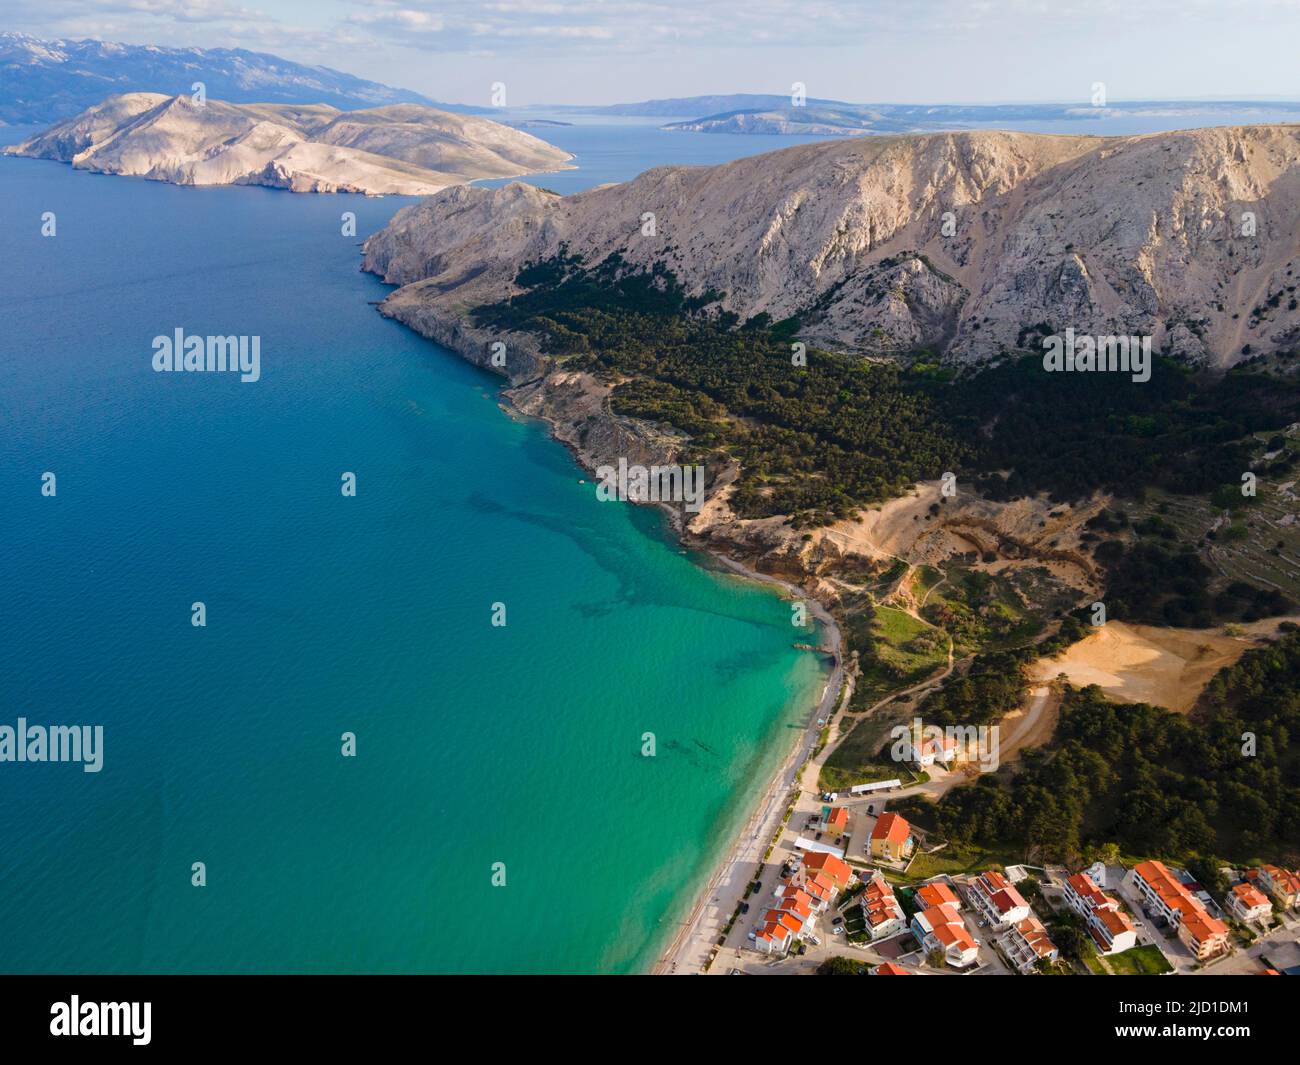 Drone shot, spiaggia di Baska, isola di Krk, isola di Prvic, terraferma dietro, Baia del Golfo del Quarnero, Primorje-Gorski Kotar, Croazia Foto Stock